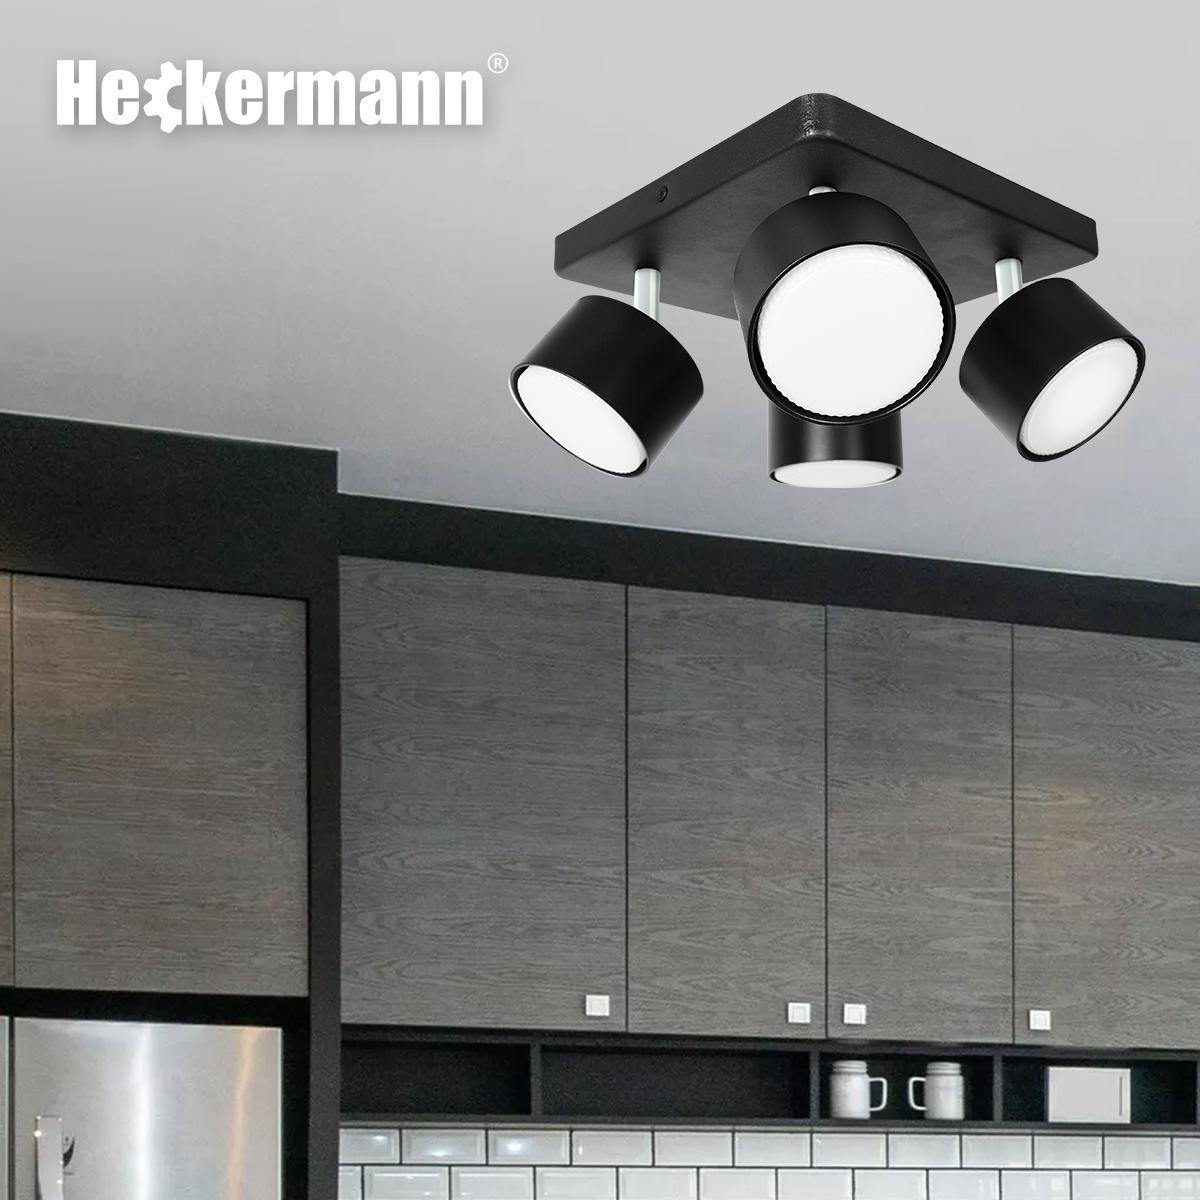 Lampa sufitowa punktowa LED Heckermann 8795318A Czarna 4x głowica + 4x Żarówka LED GX53 7W Neutral 4 Full Screen